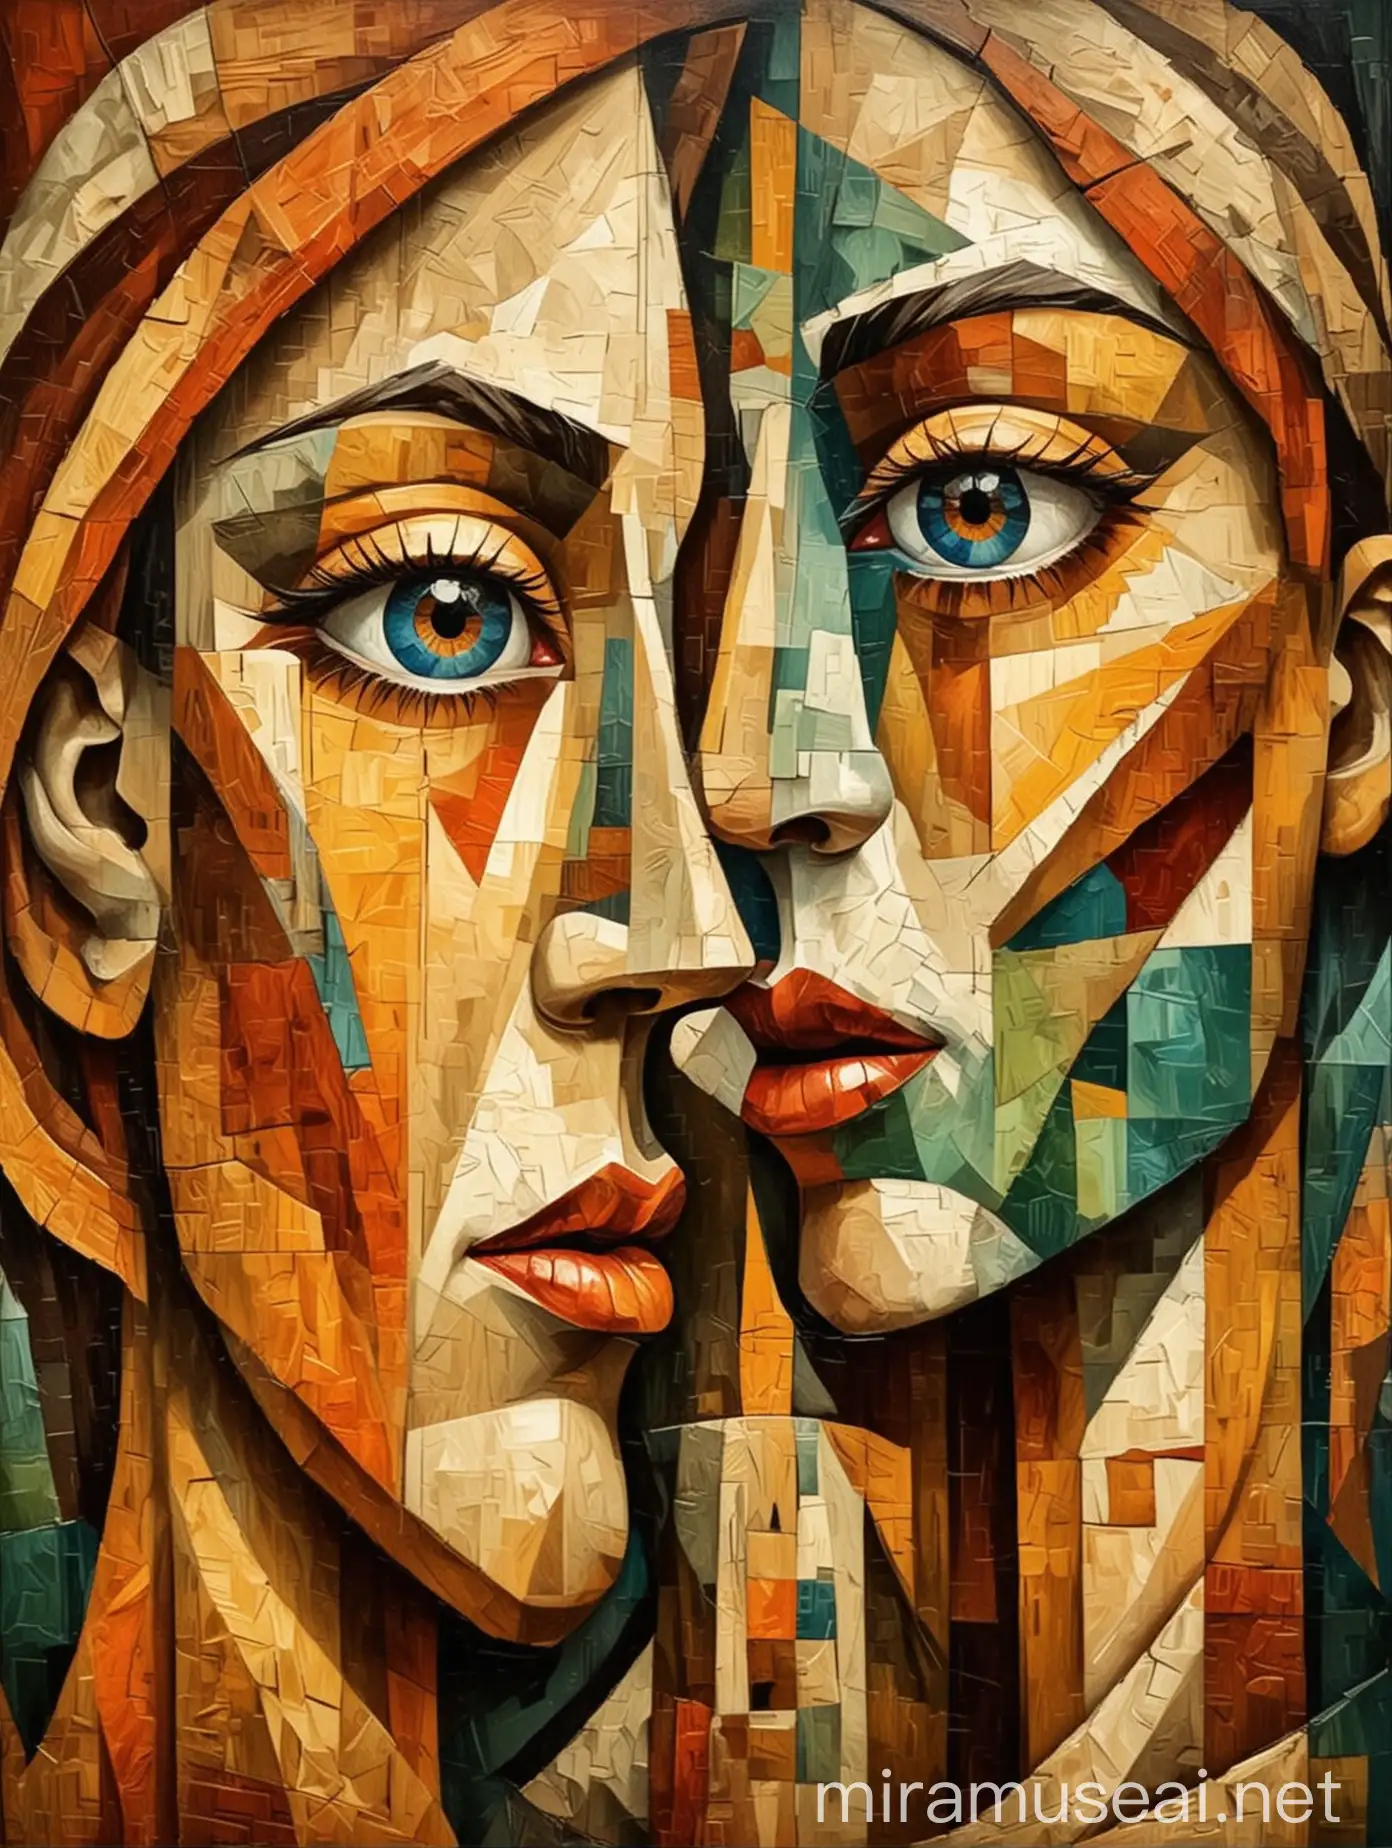 Harmonious Embrace Cubist Portrait with Intertwining Faces